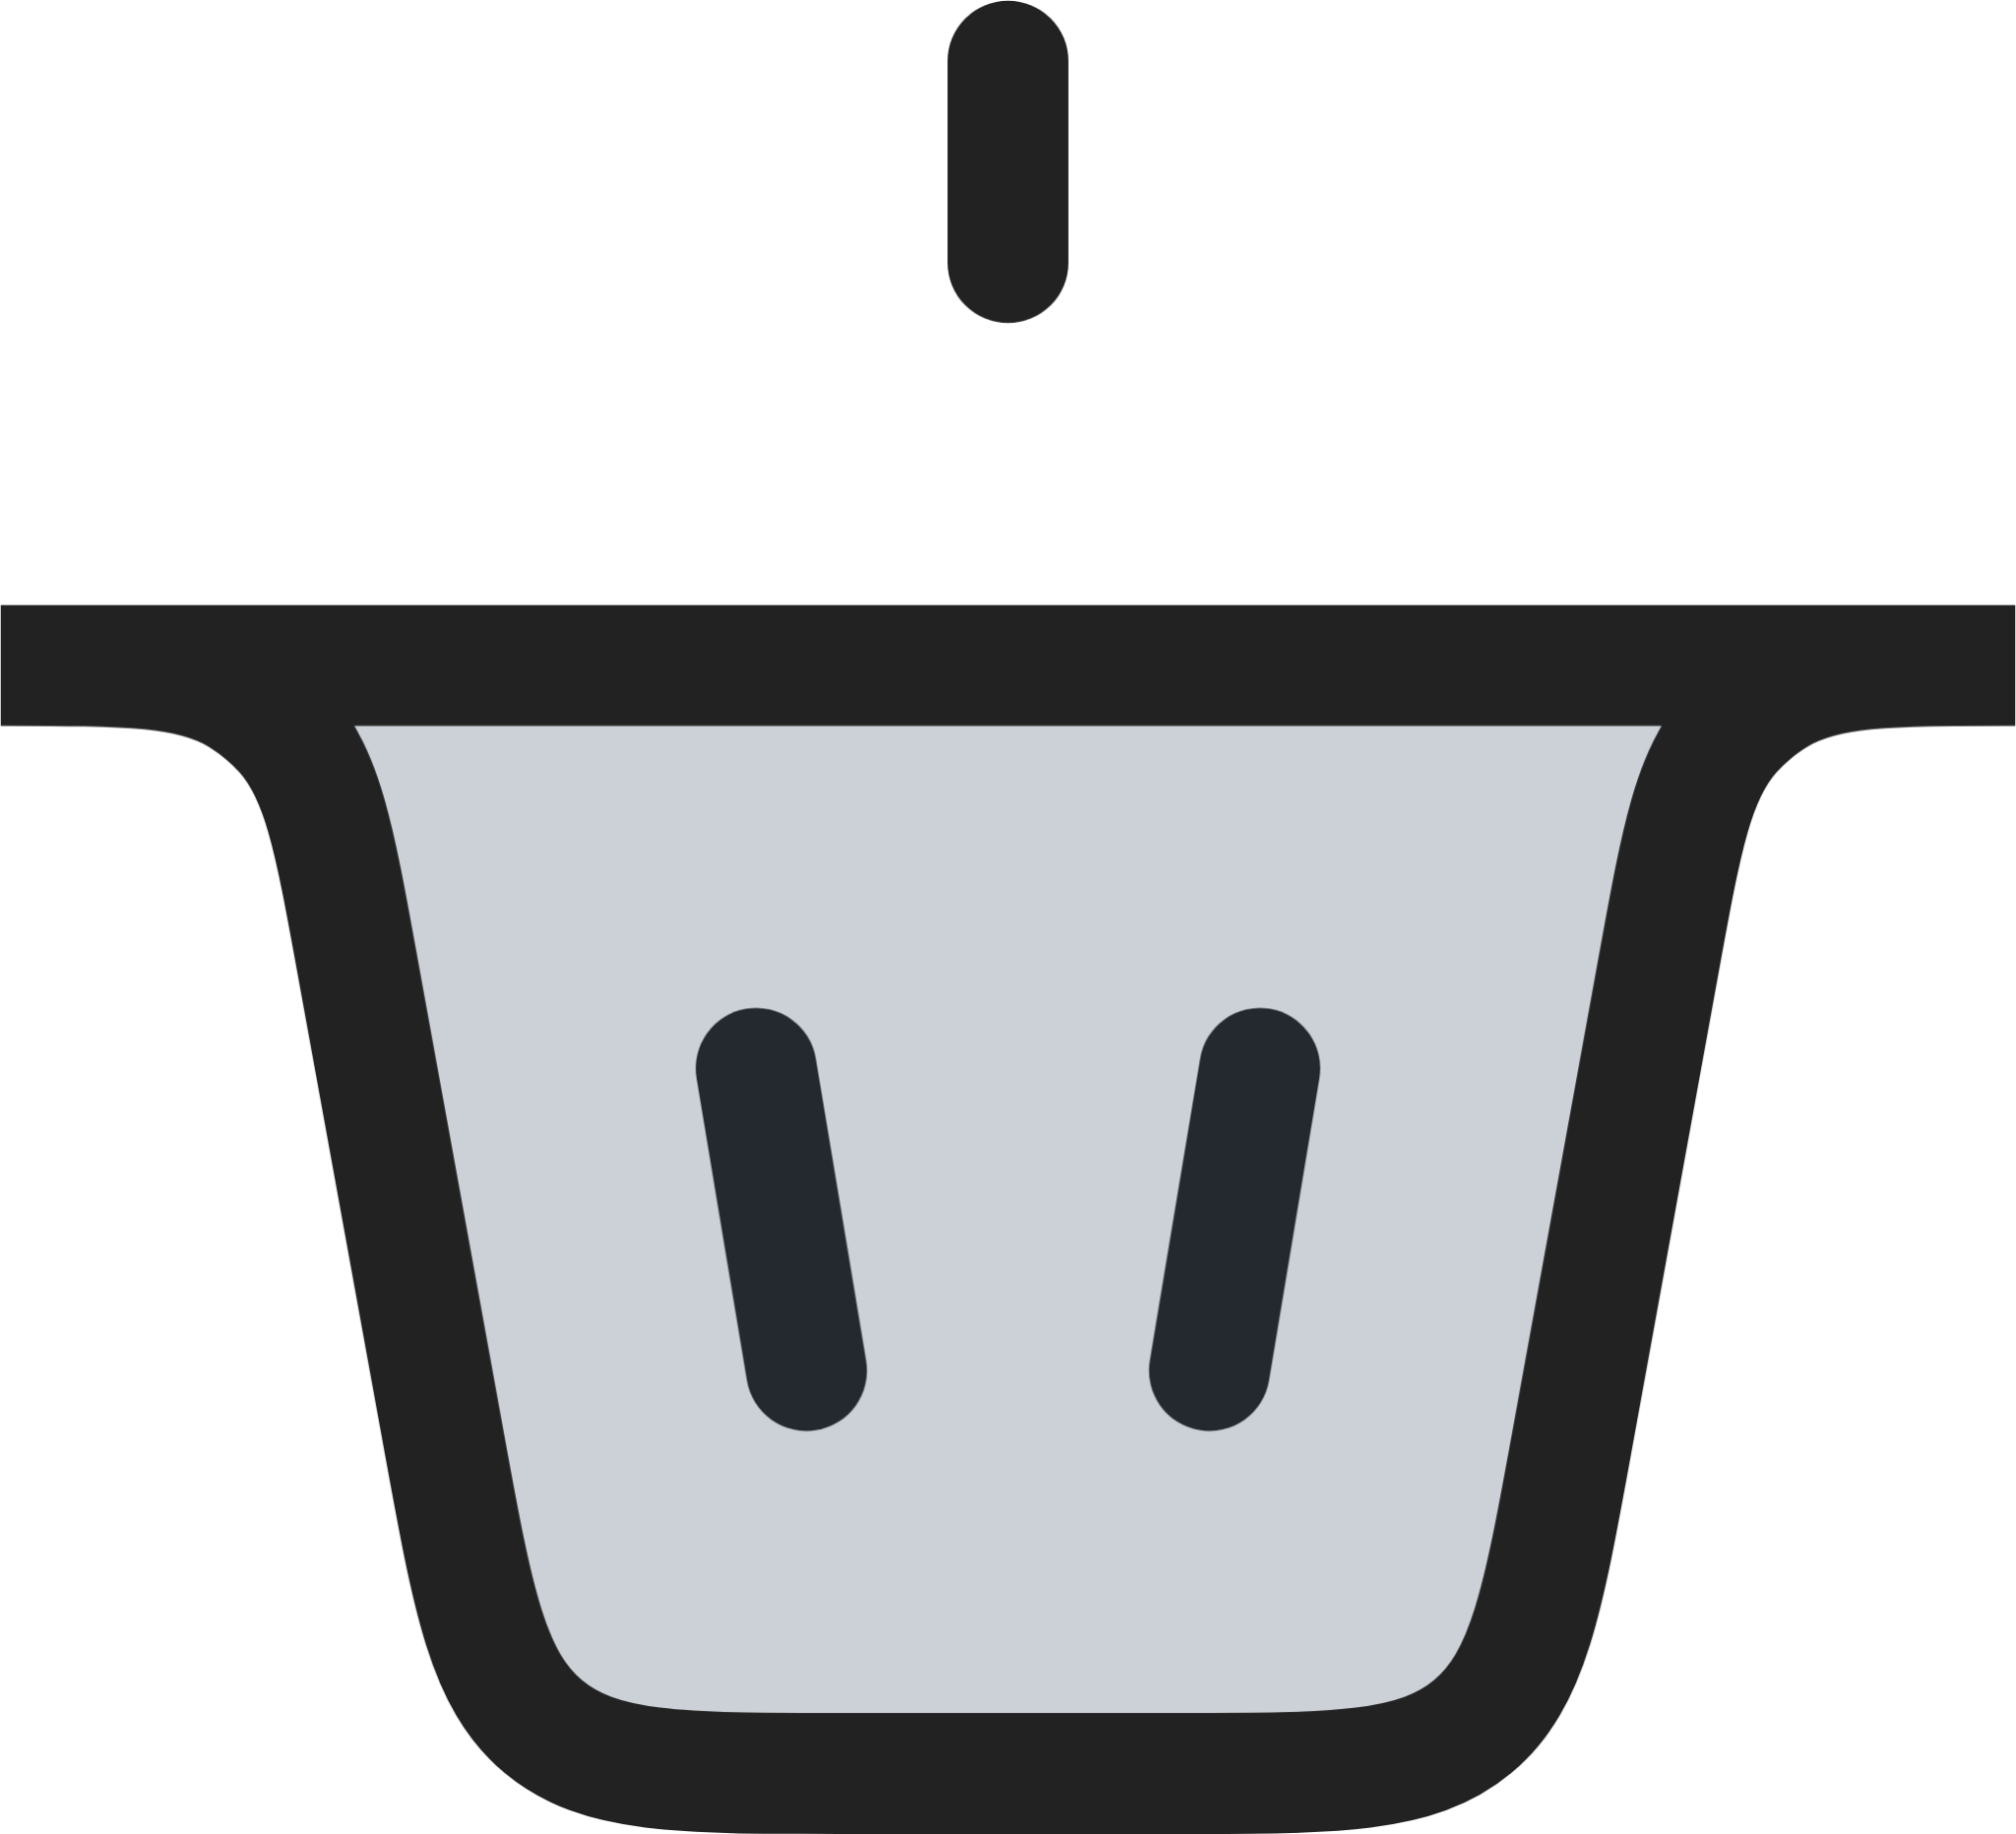 Basket duotone line icon